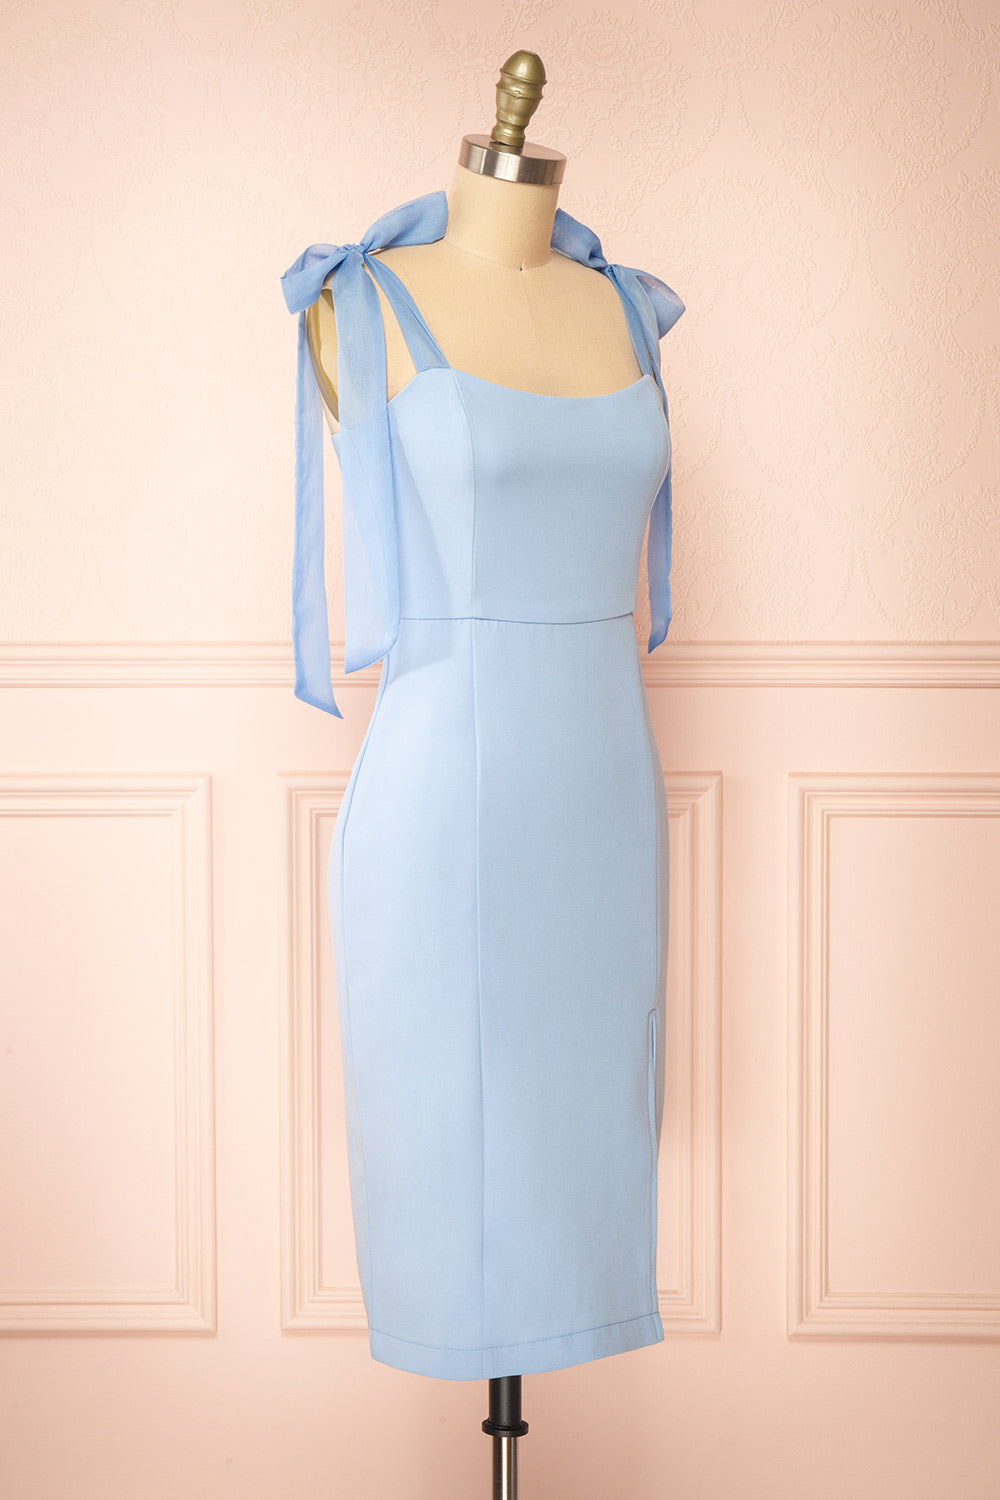 Claudy Short Blue Dress w/ Bow Straps | Boutique 1861 side view